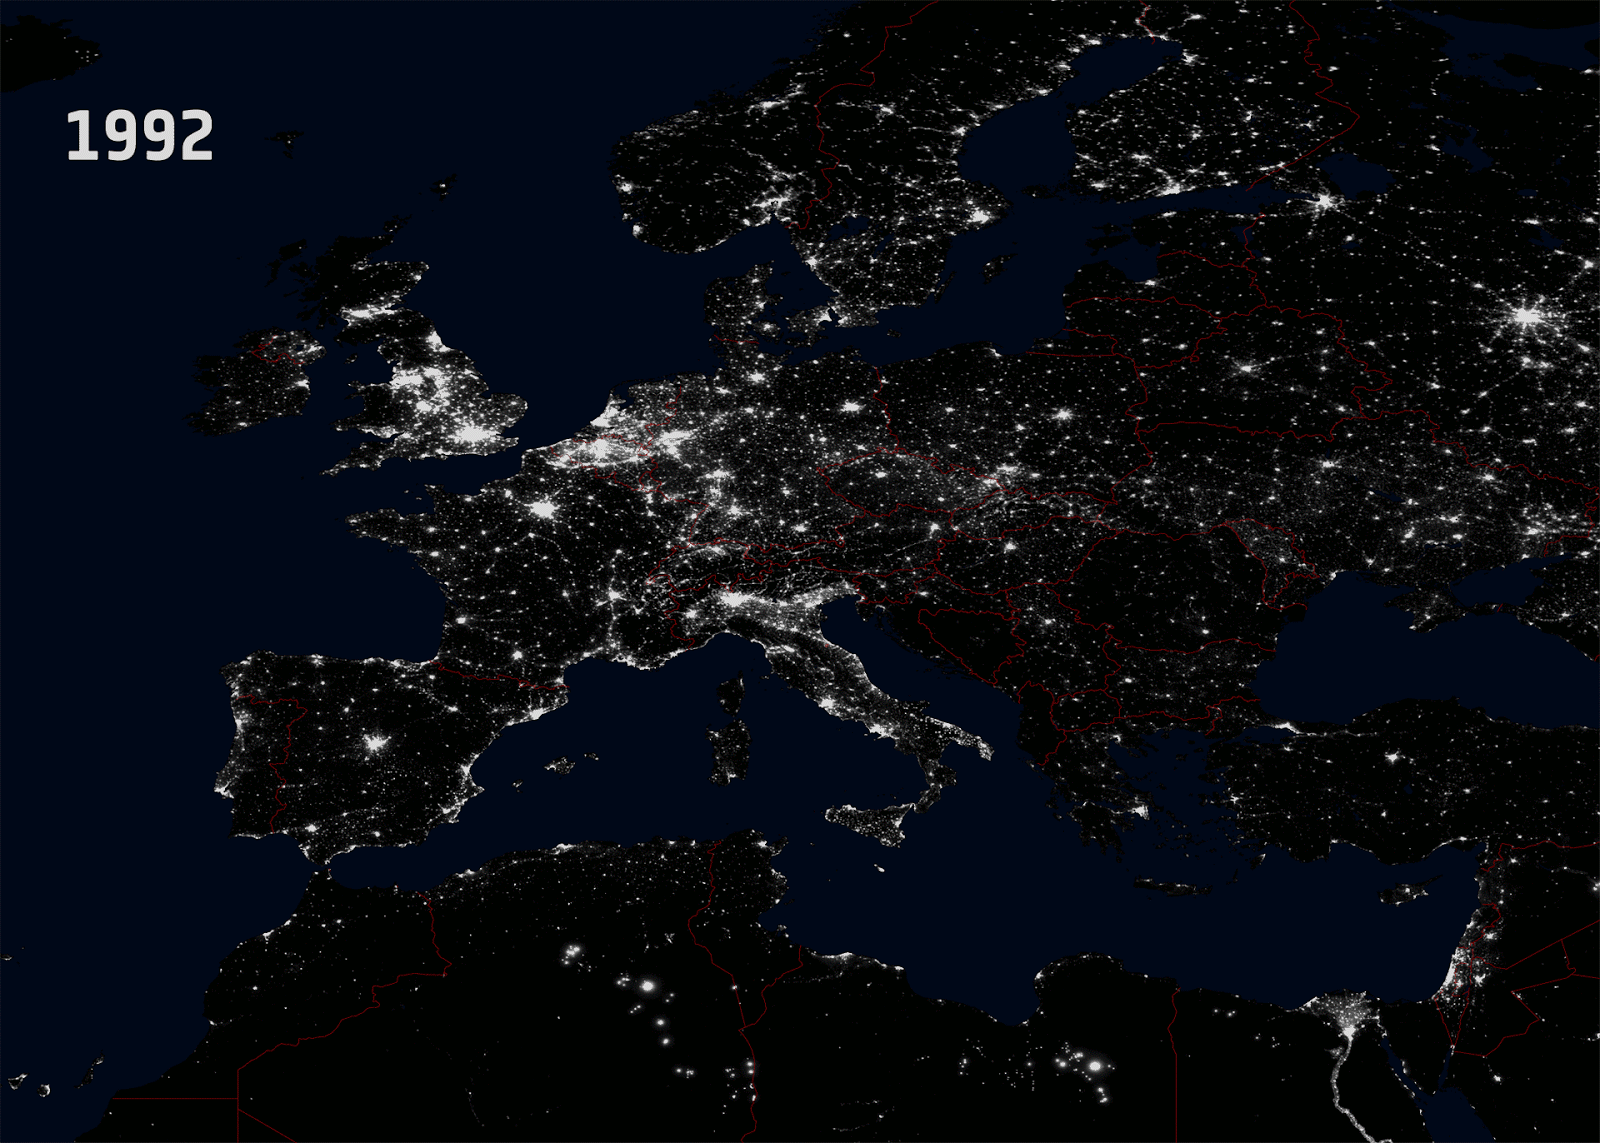 Europe at night: 1992 vs. 2010